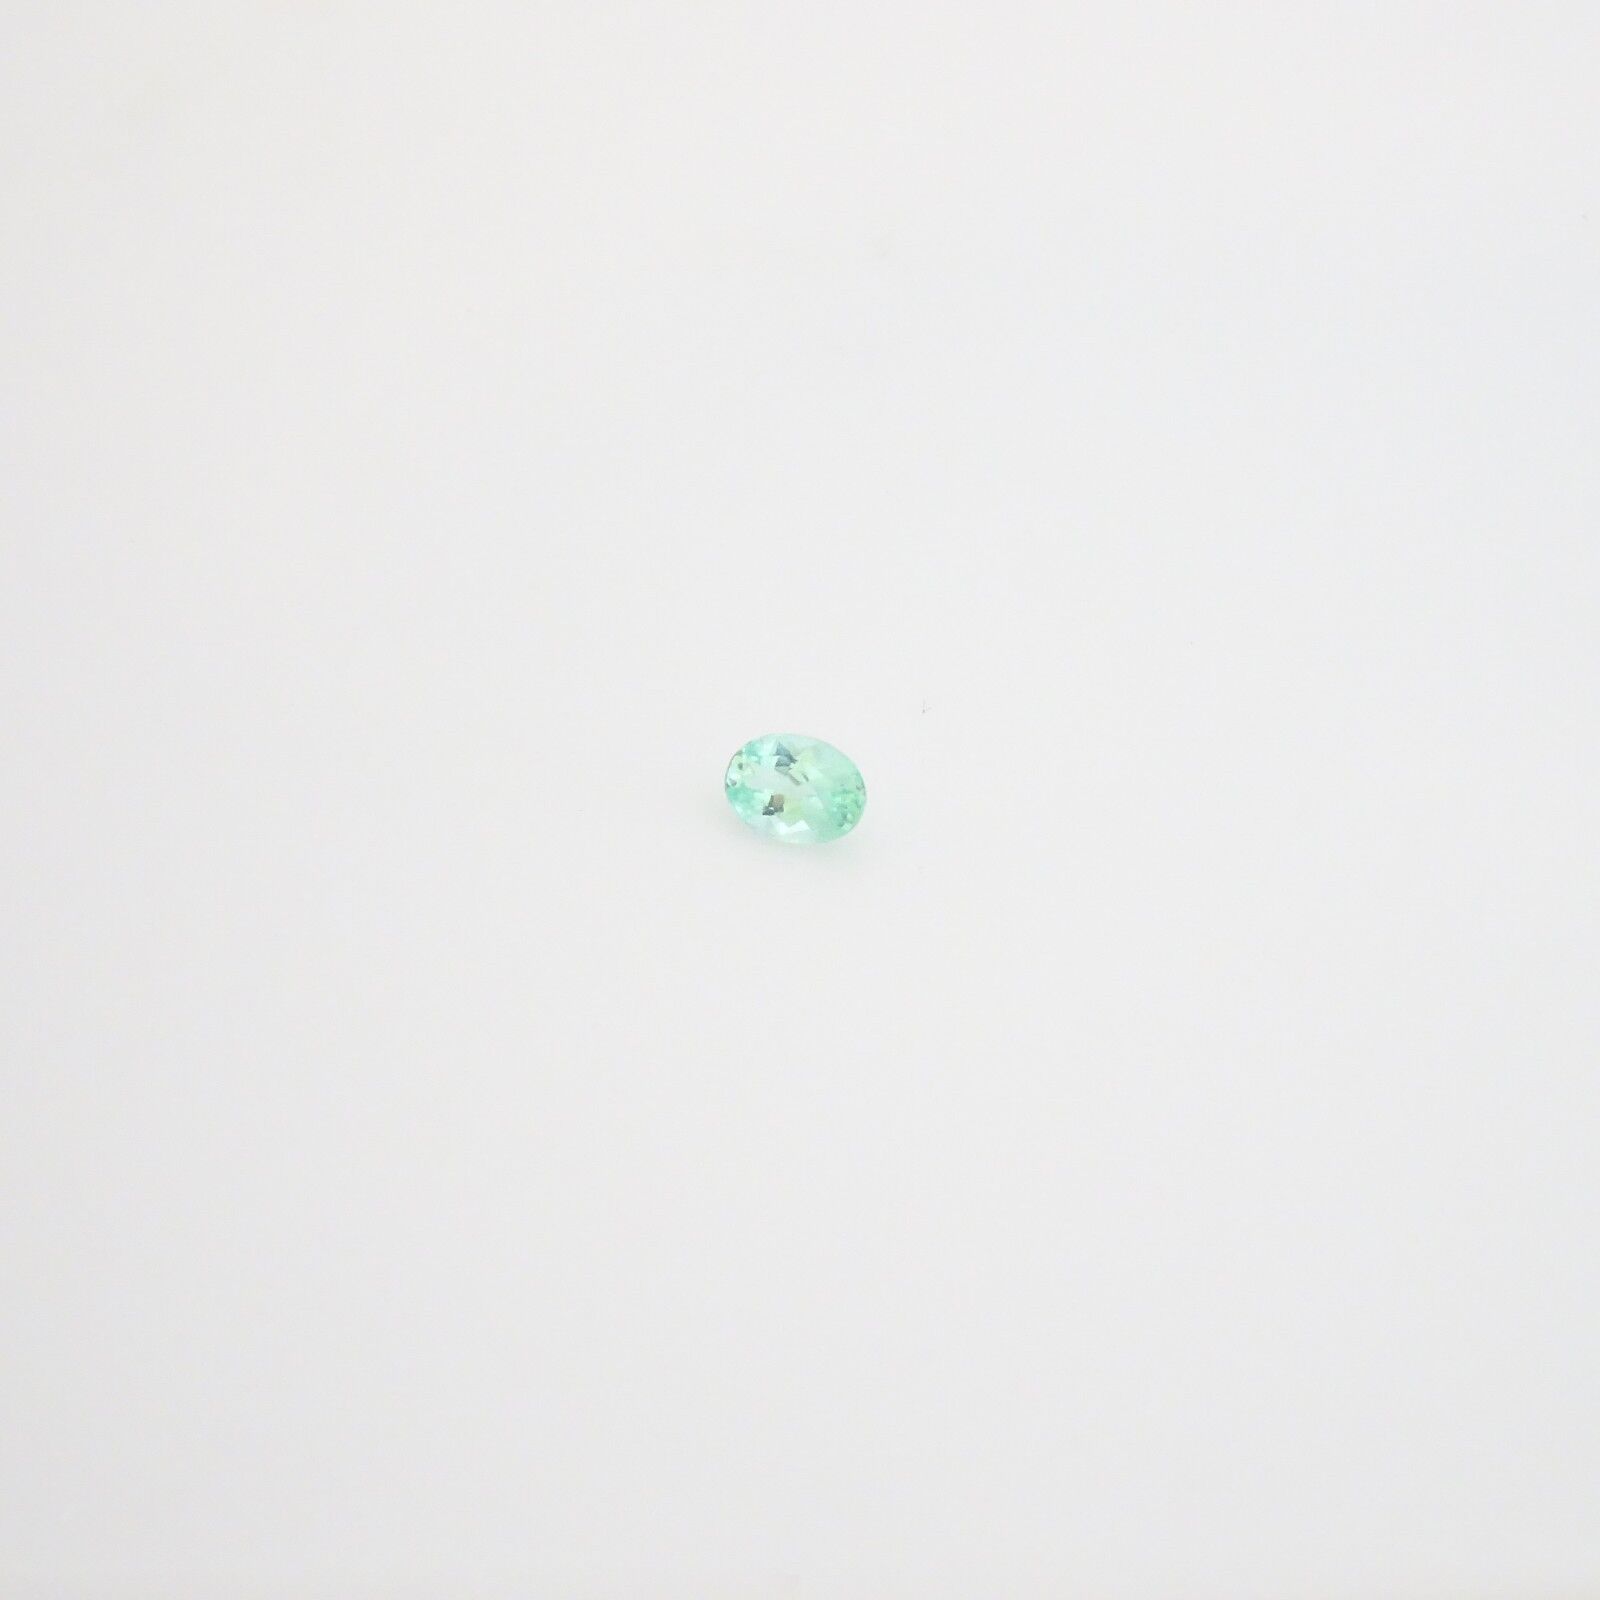 Paraiba - Copper Bearing - Tourmaline - 0.80ct Oval cut - 7x5mm - Loose Gemstone Paraiba - фотография #6